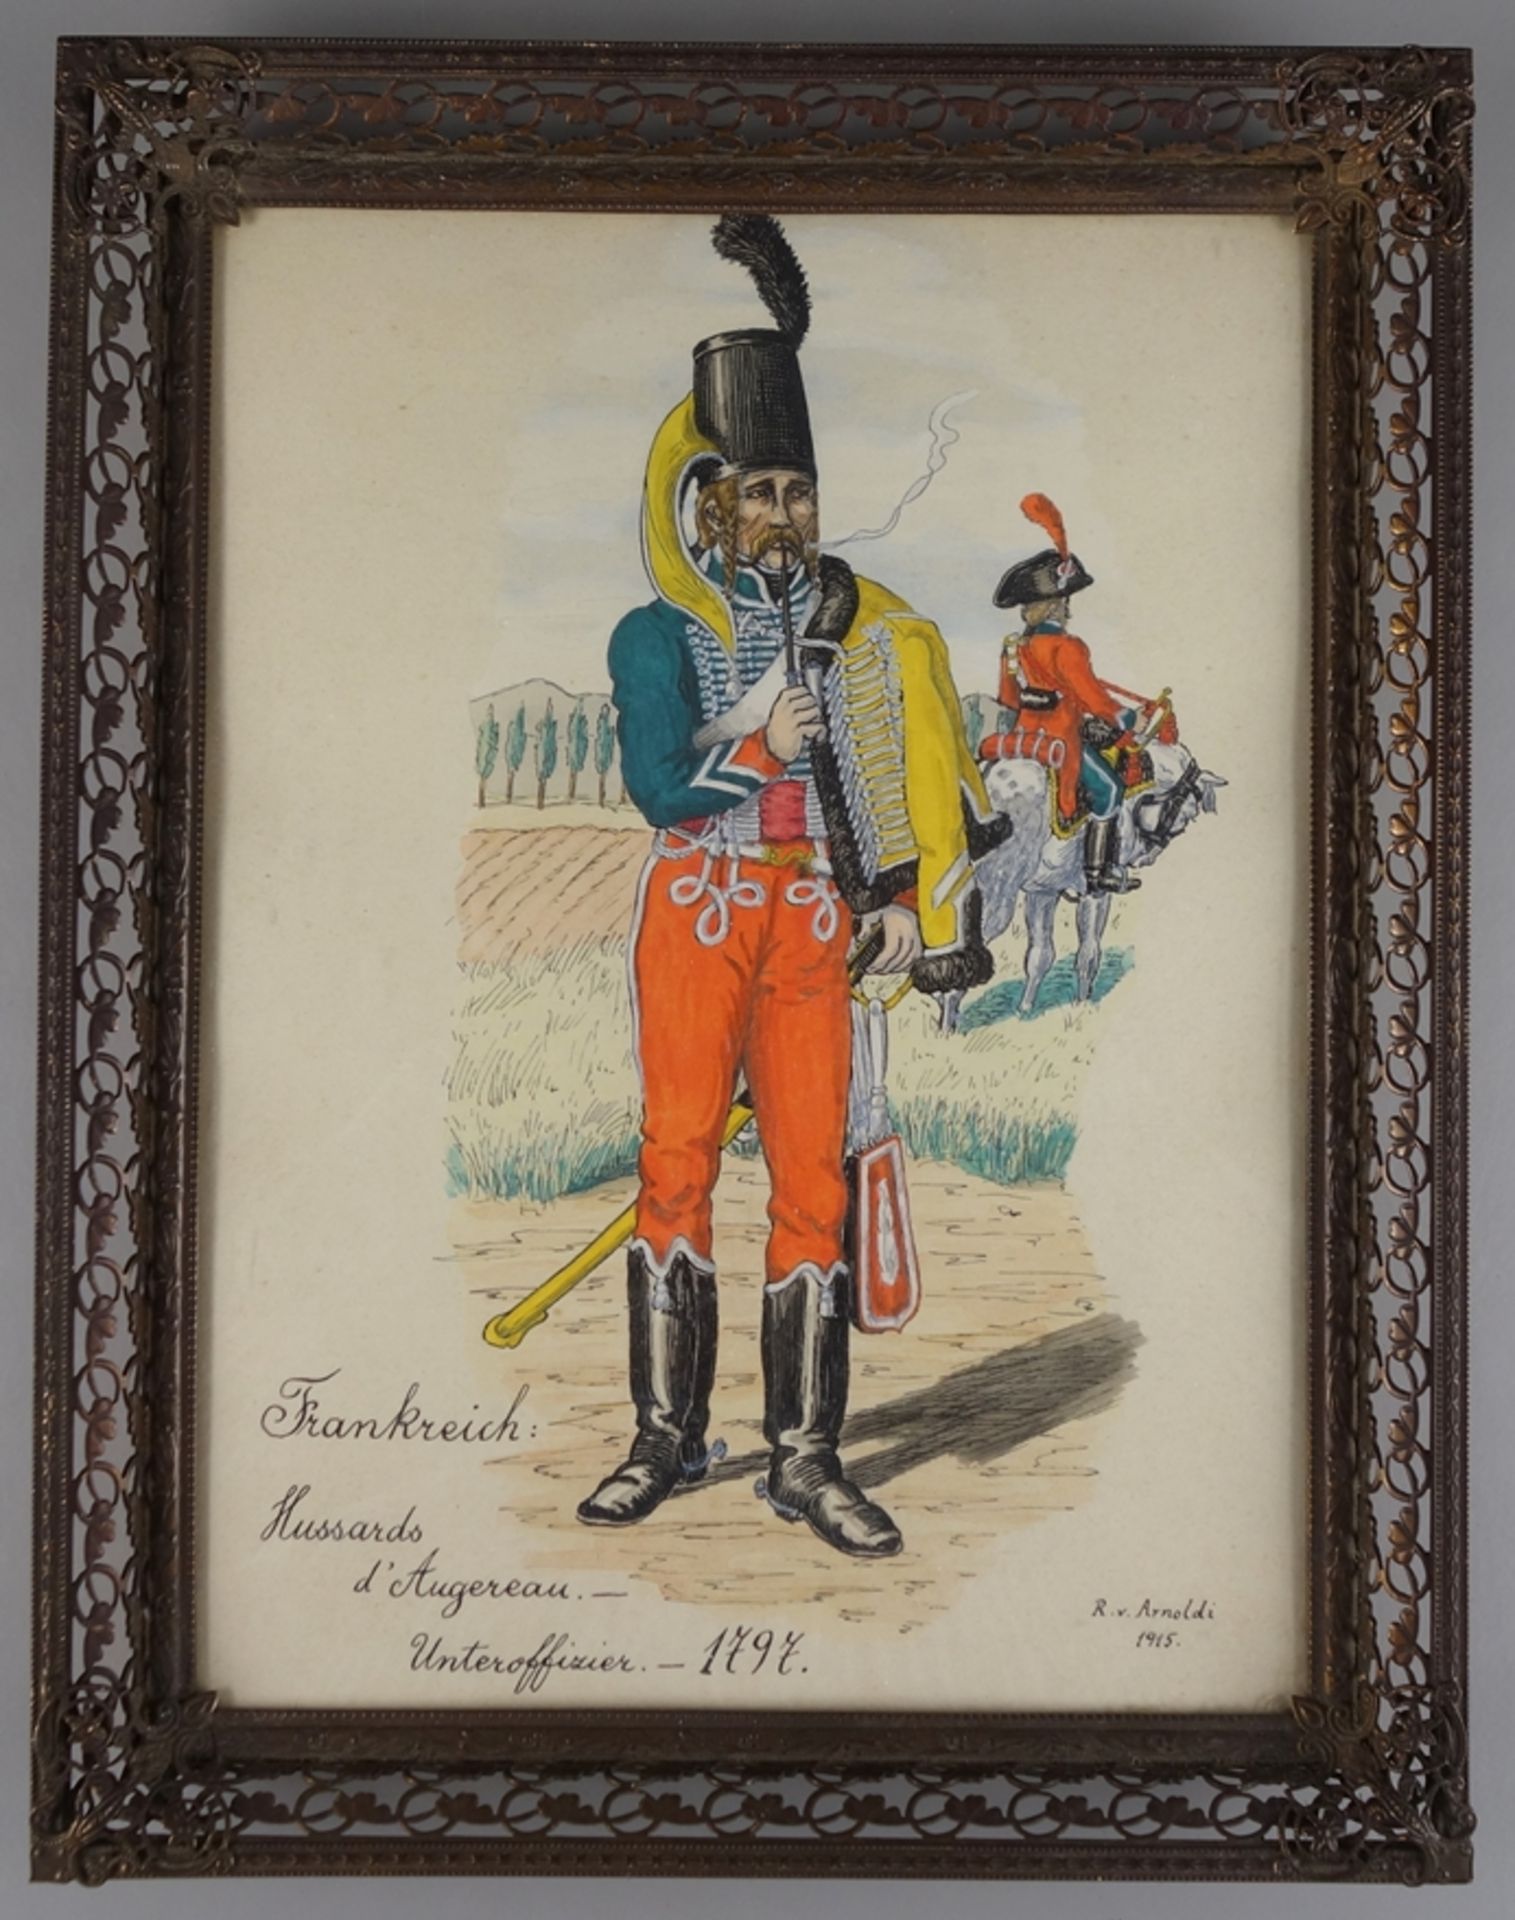 R. v. Arnoldi, "Frankreich: Hussards d'Augereau, Unteroffizier, 1797", 1915, aq